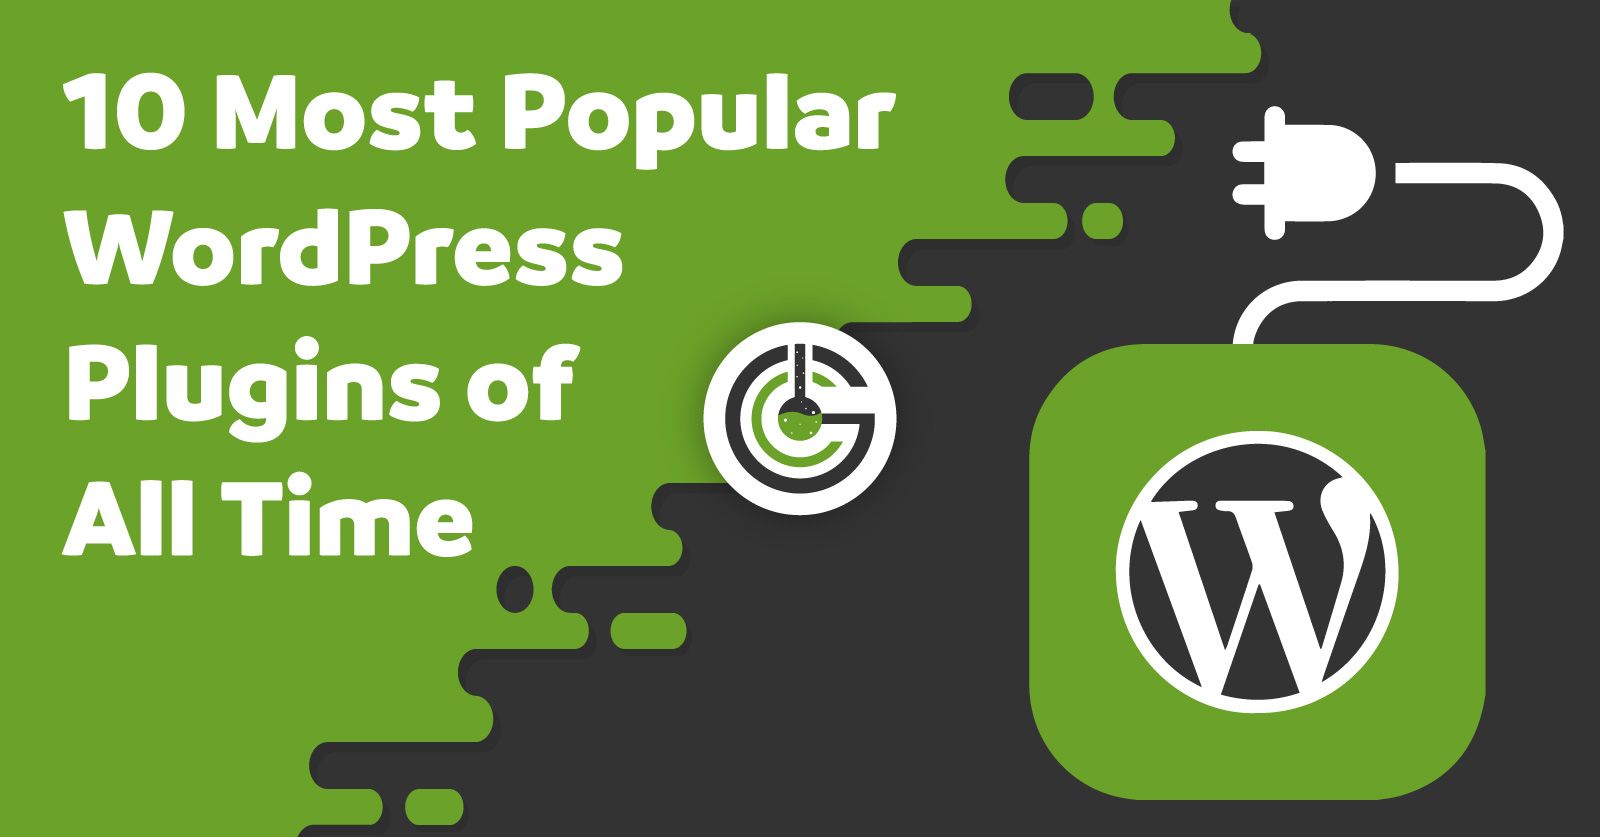 10 Most Popular WordPress Plugins of All Time